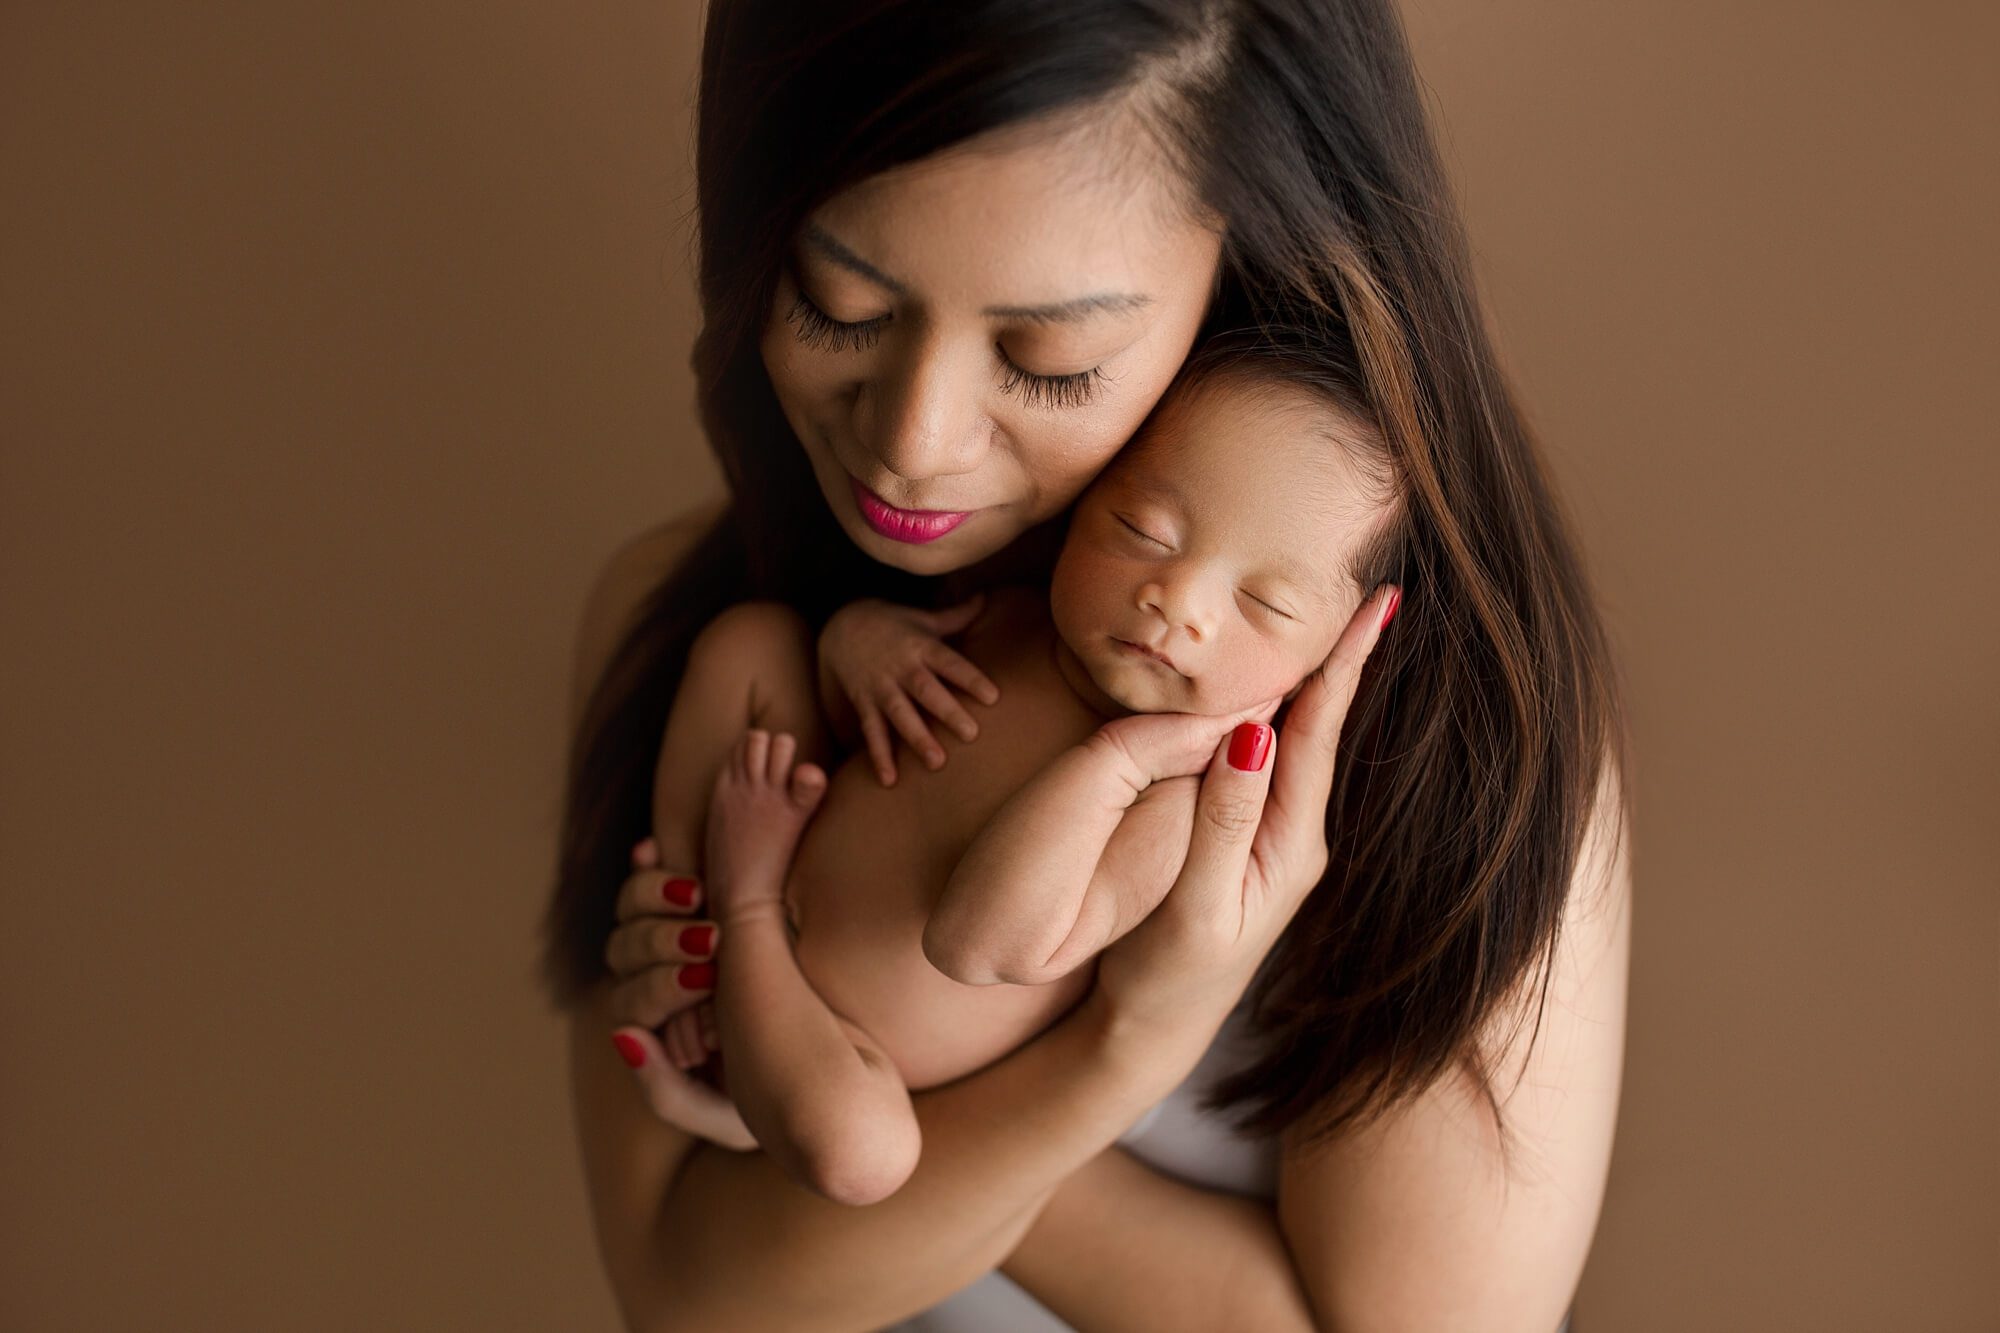 newborn photography seattle | baby boy session puyallup